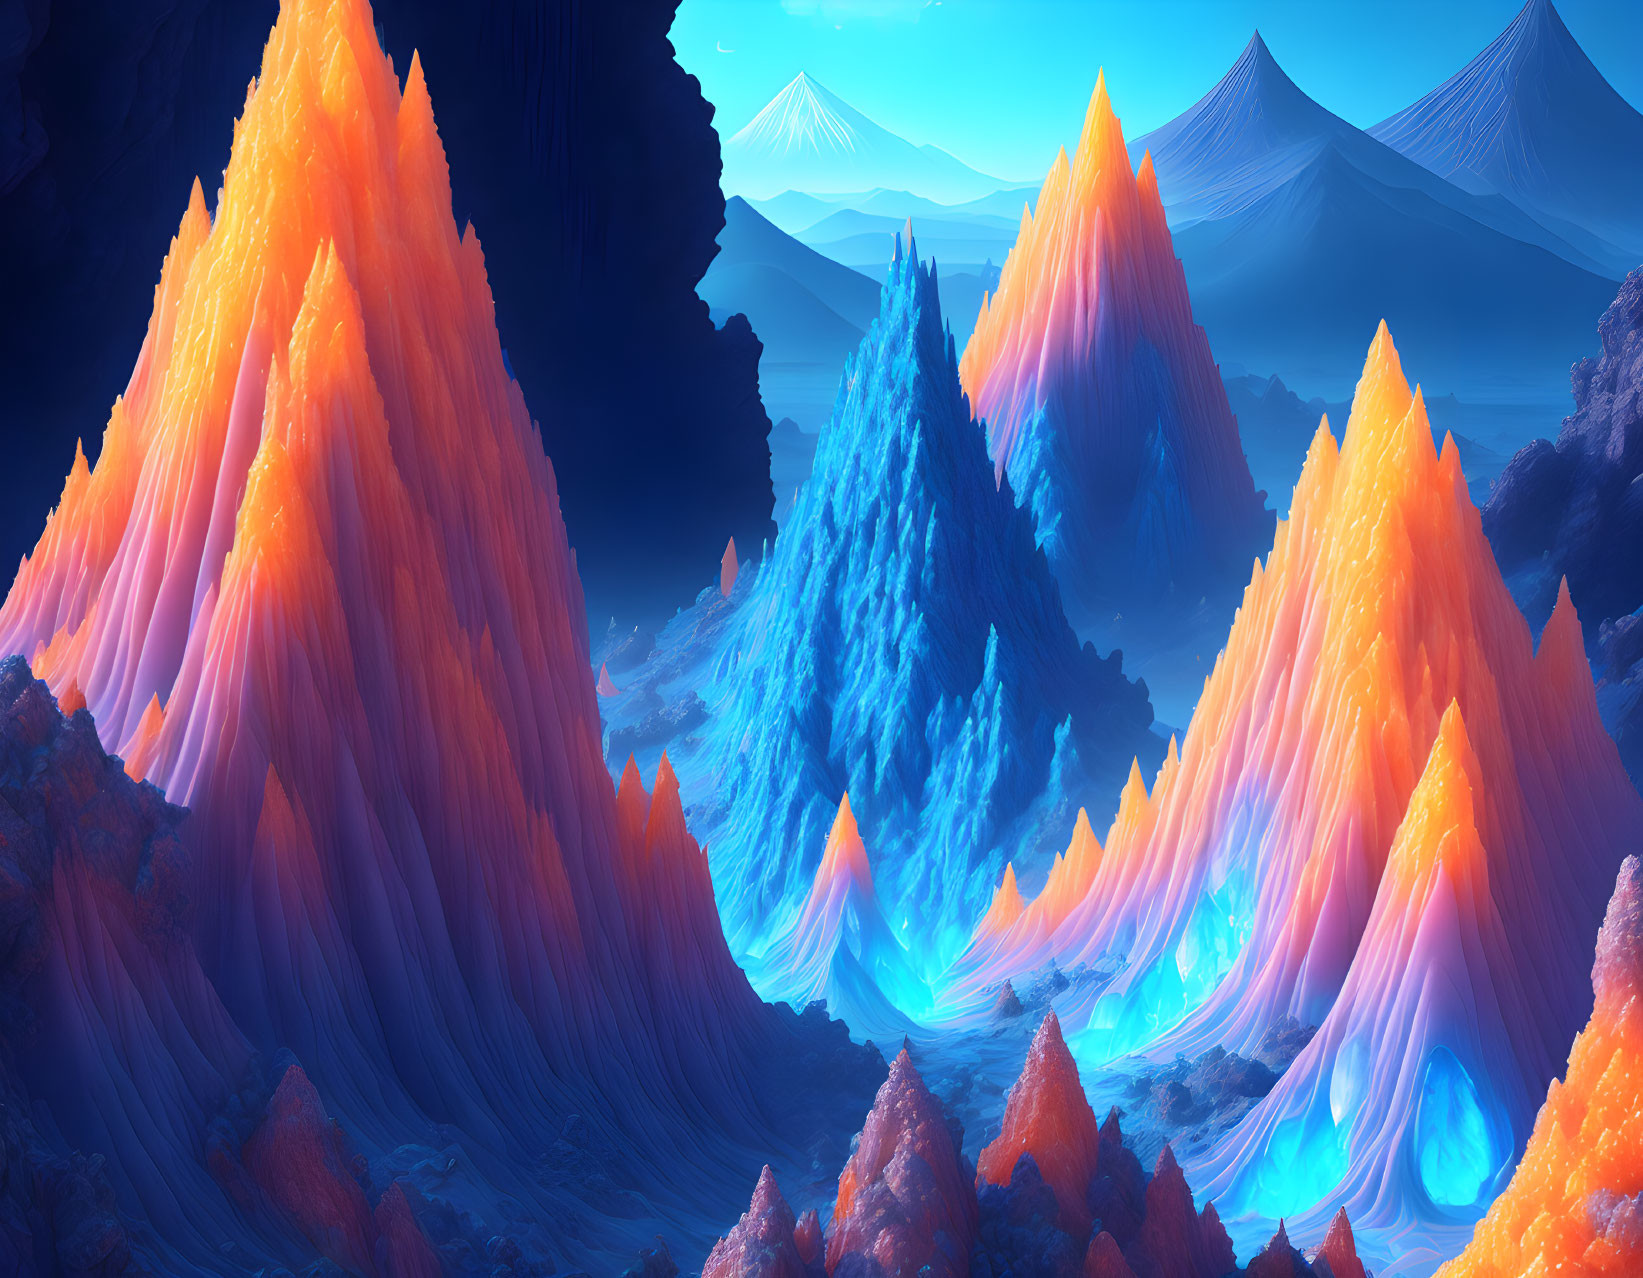 Colorful Mountain Peaks in Vibrant Fantasy Landscape